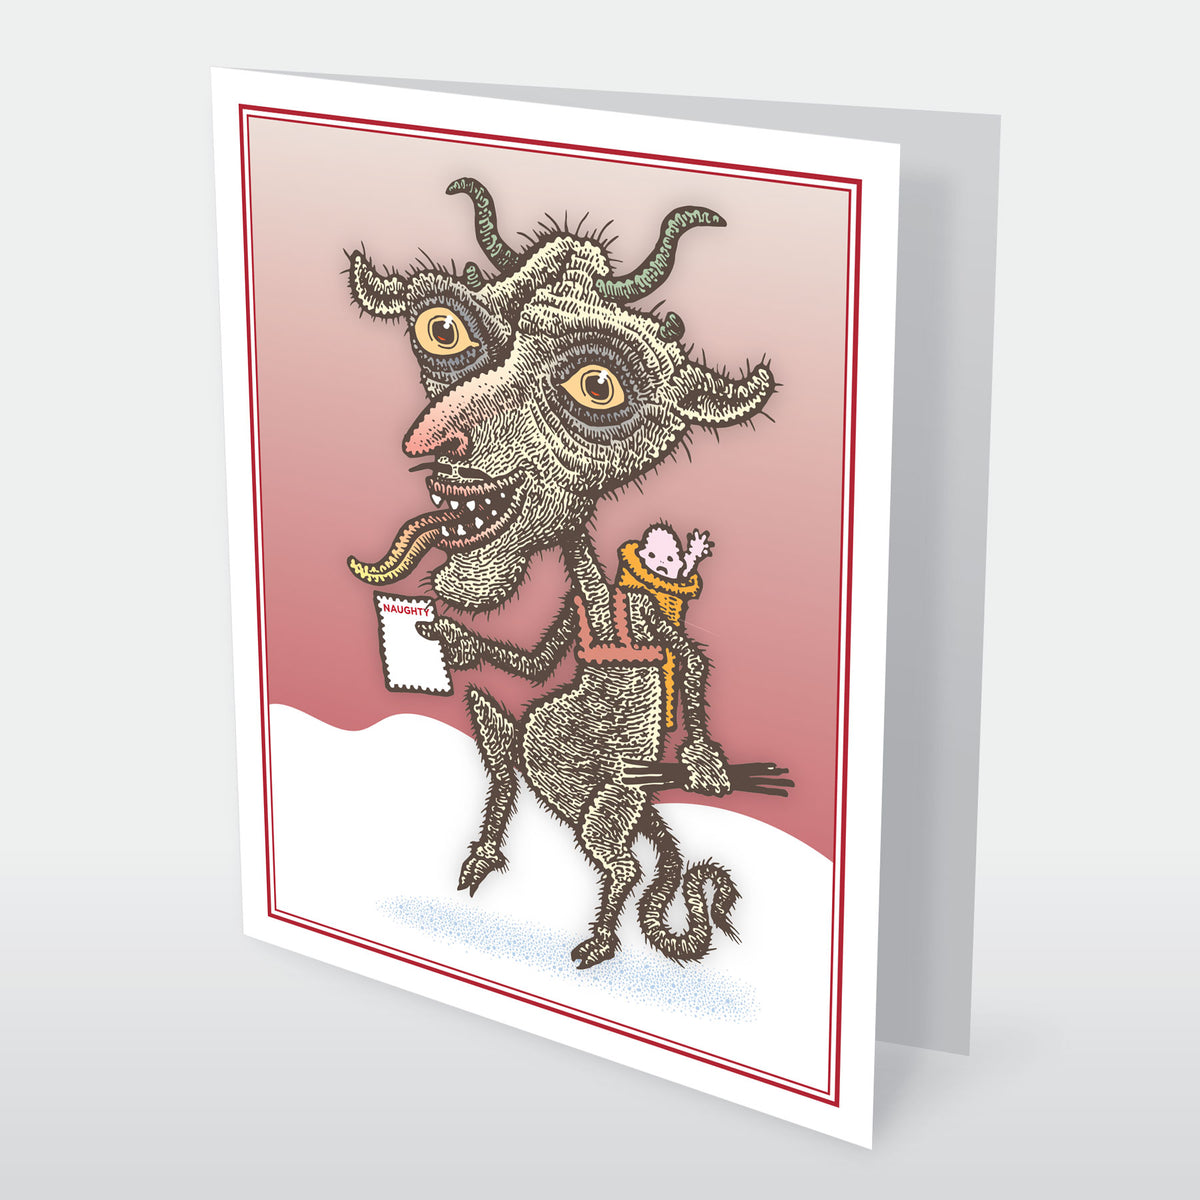 Happy Krampus Greeting Cards (20-Pack)